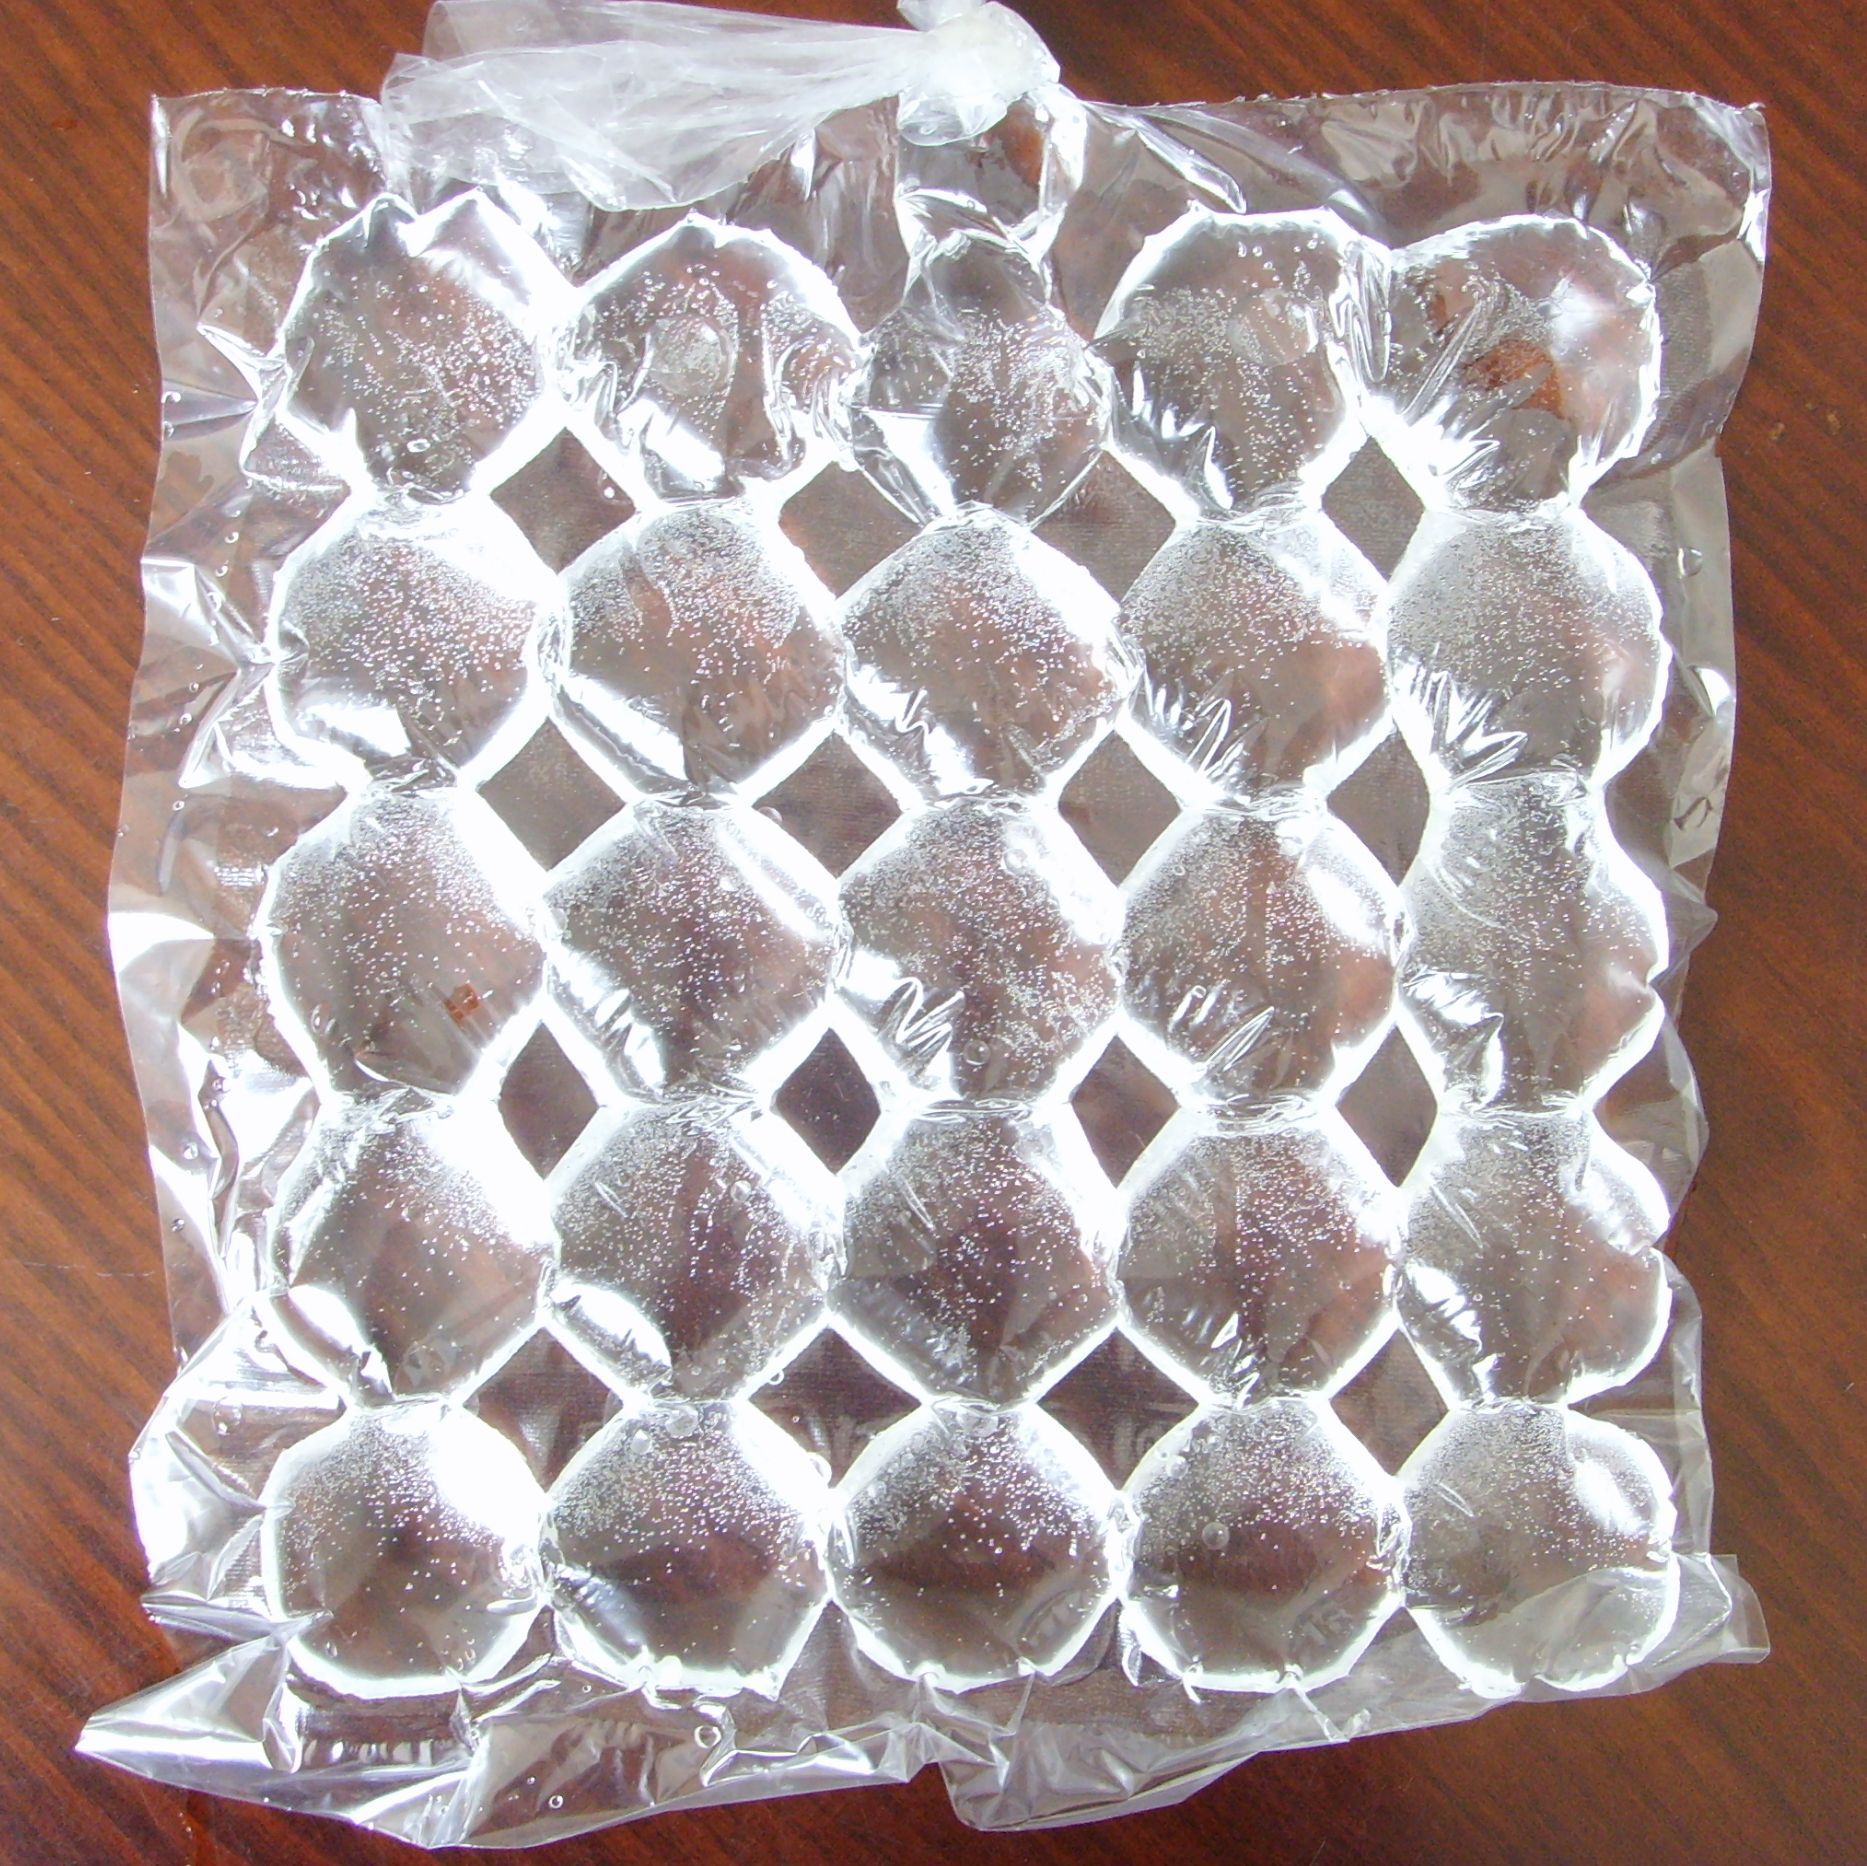 ice-cube bags.jpg